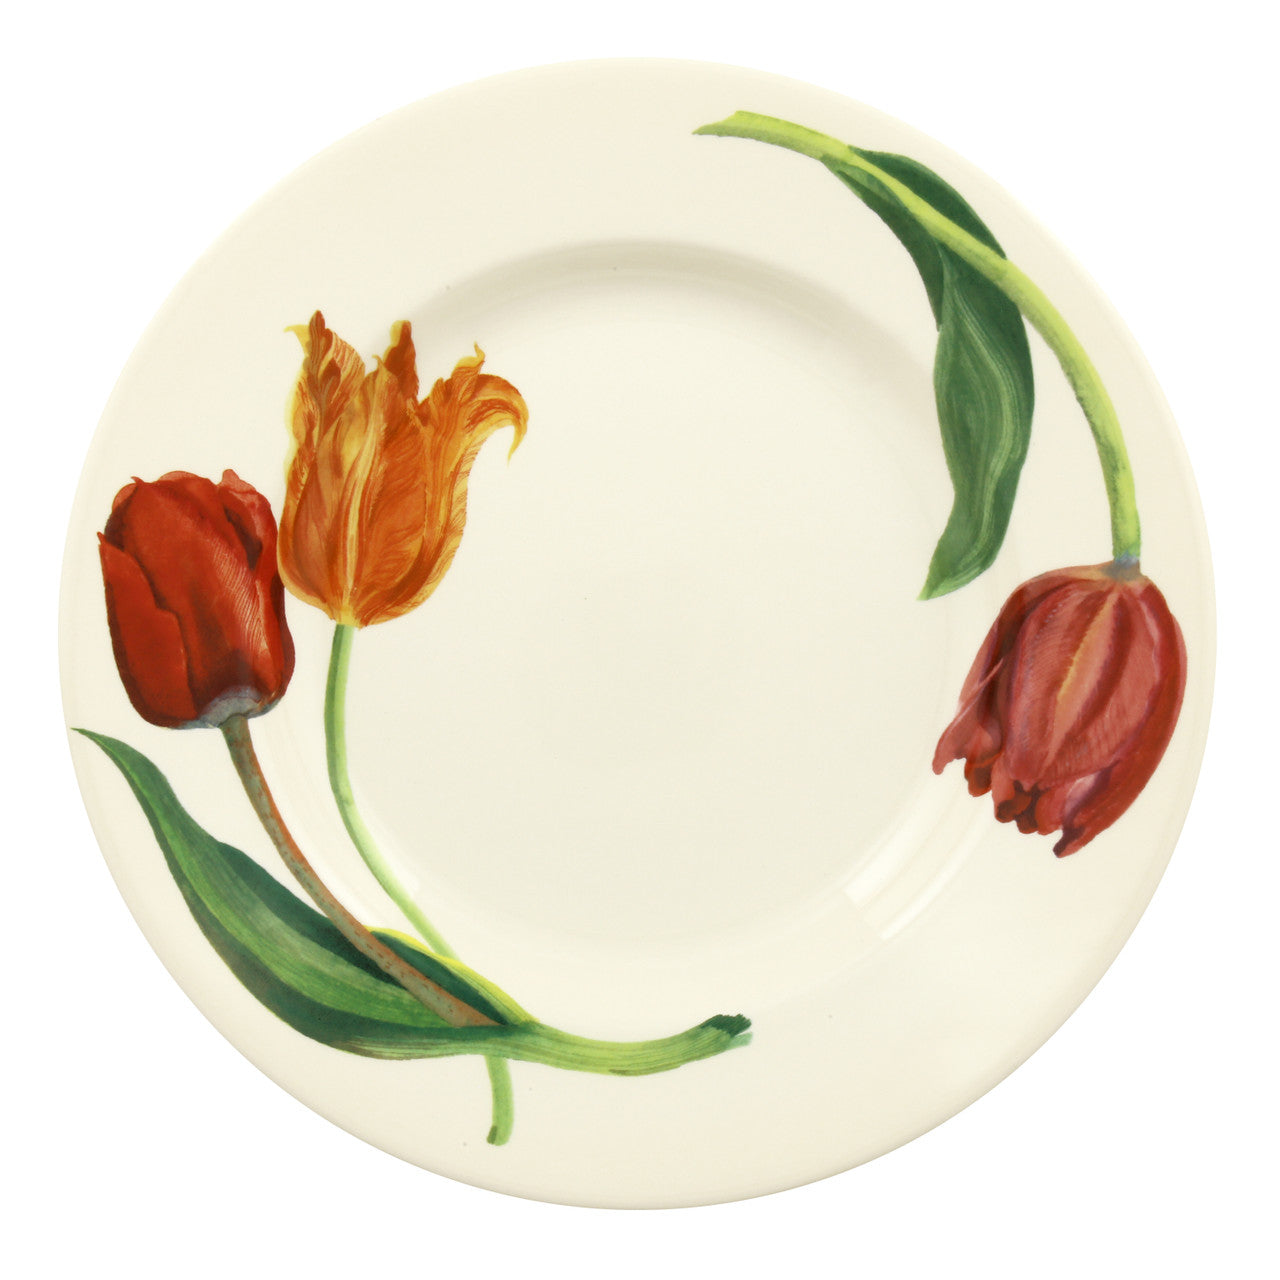 Emma Bridgewater Flowers Tulips 10 1/2 inch plate.